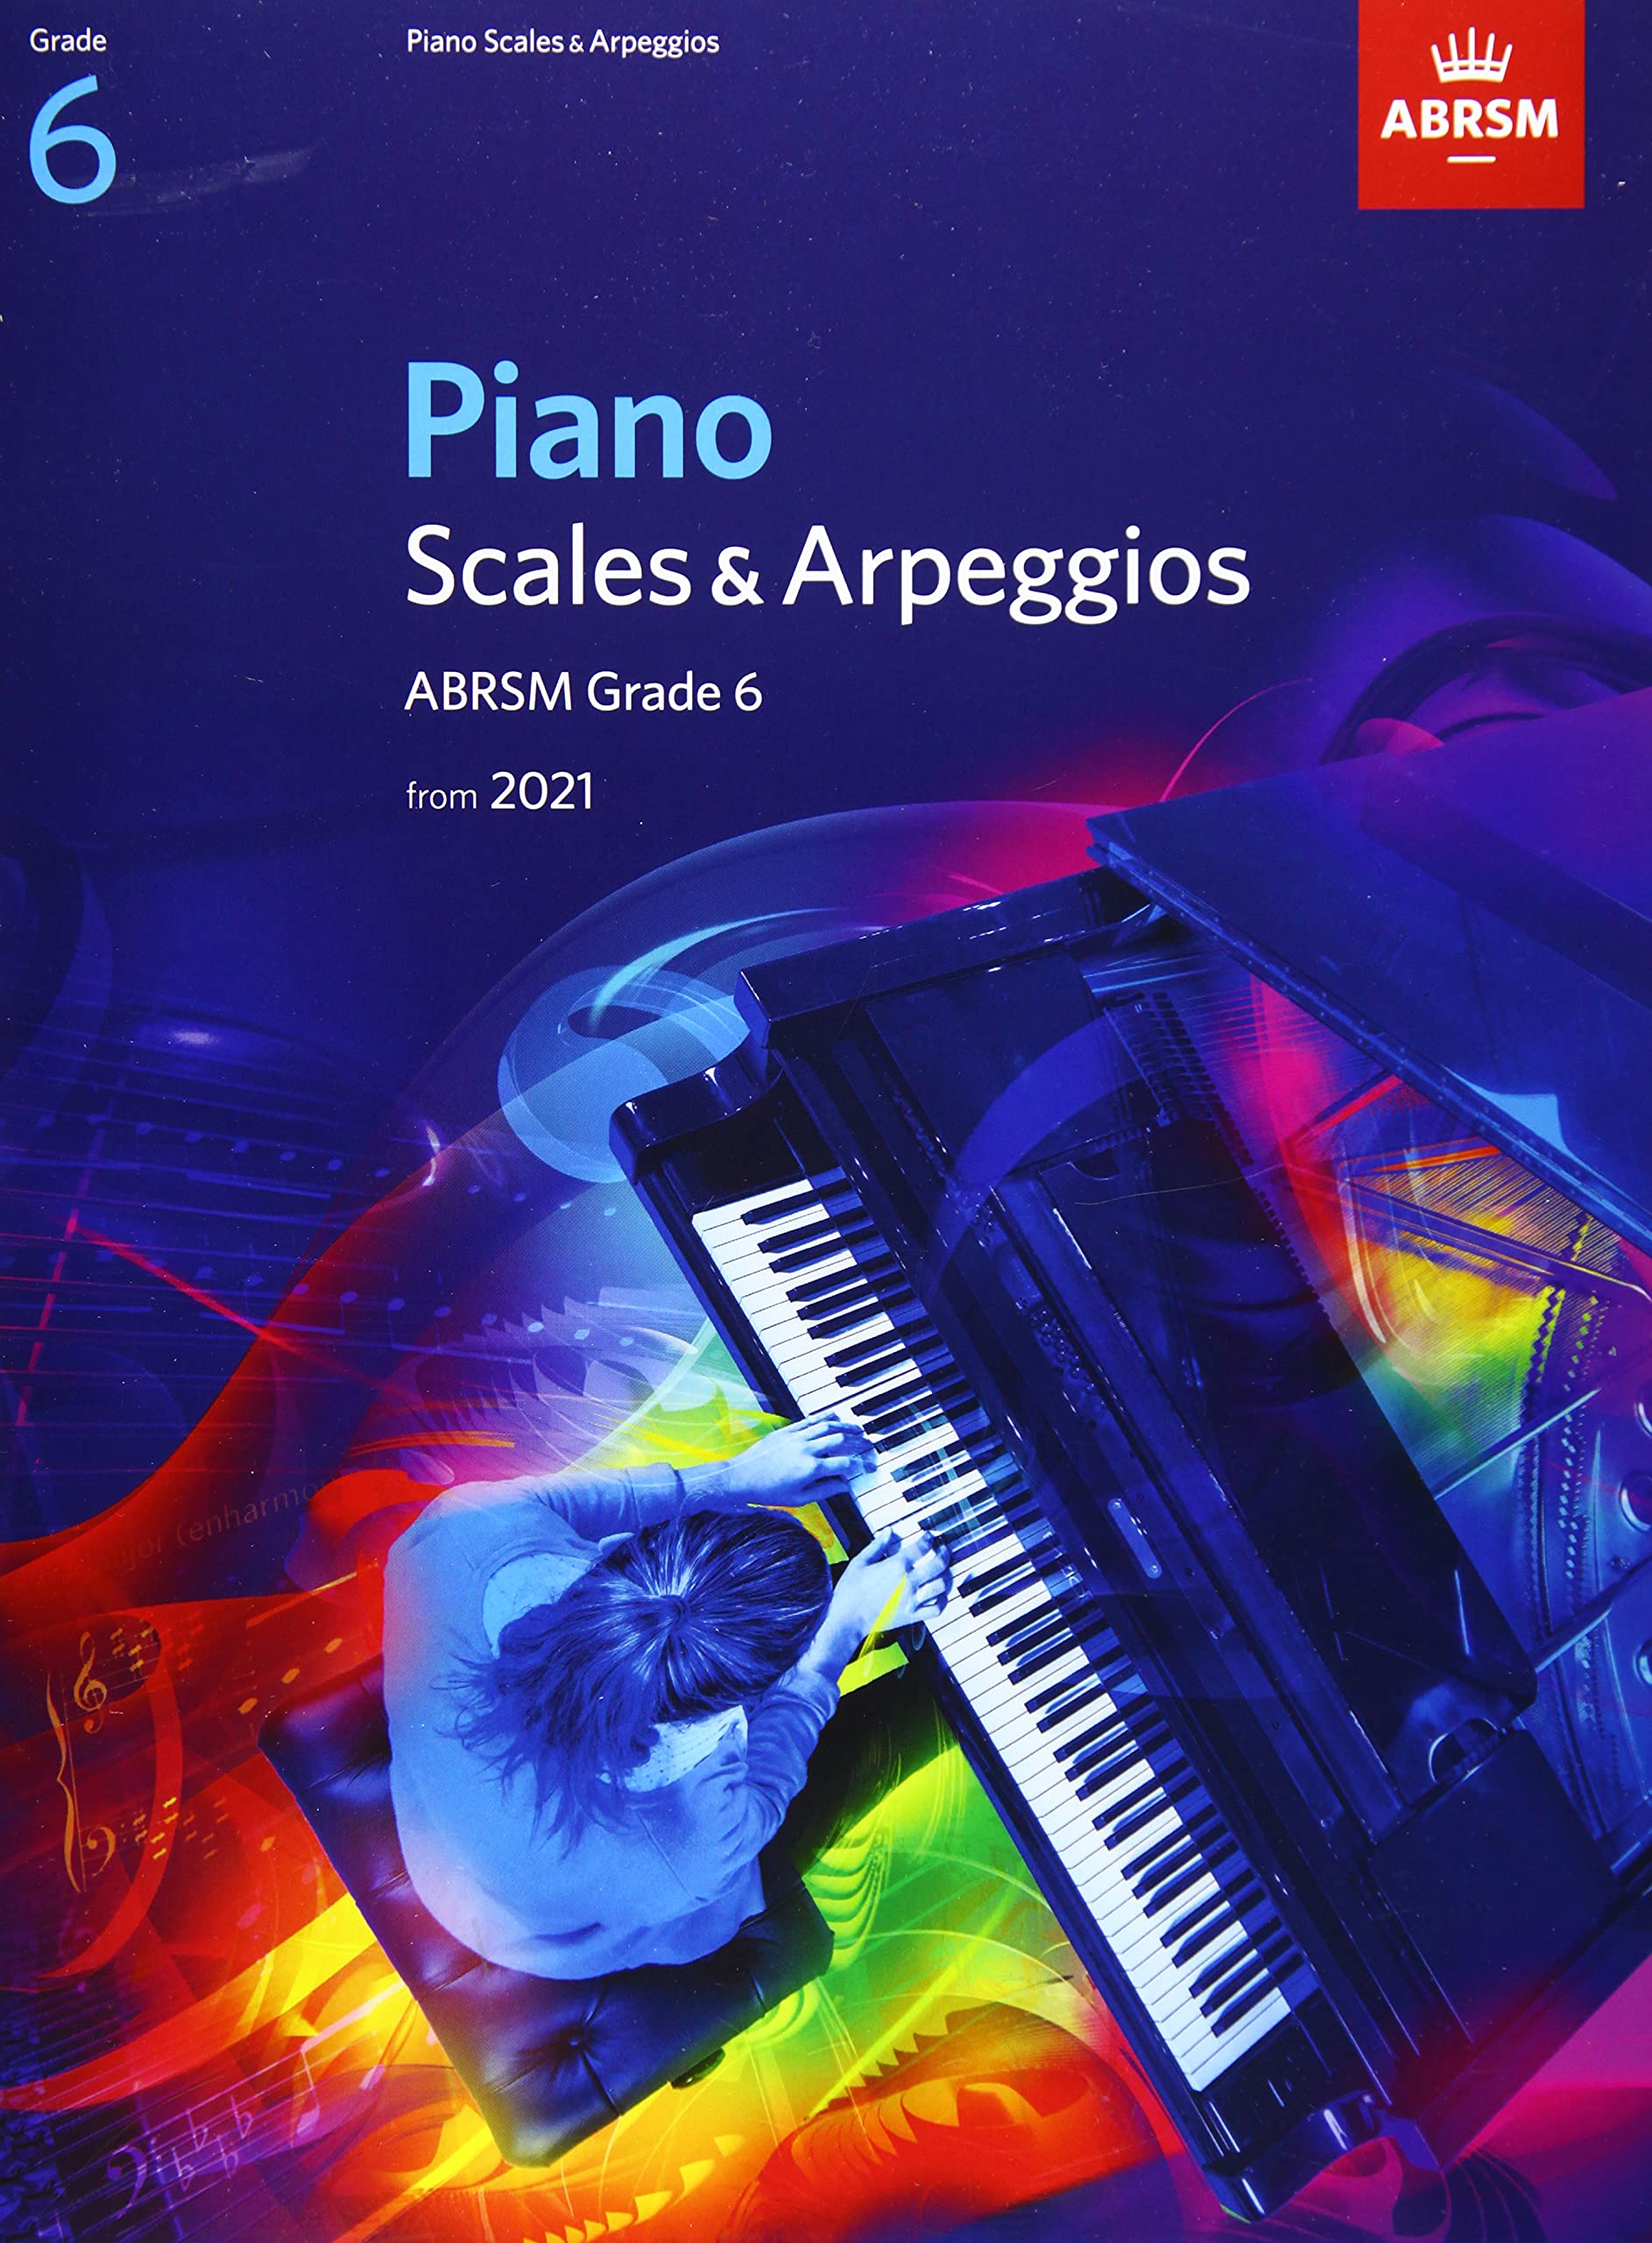 ABRSM Piano Scales & Arpeggios from 2021 Grade 6